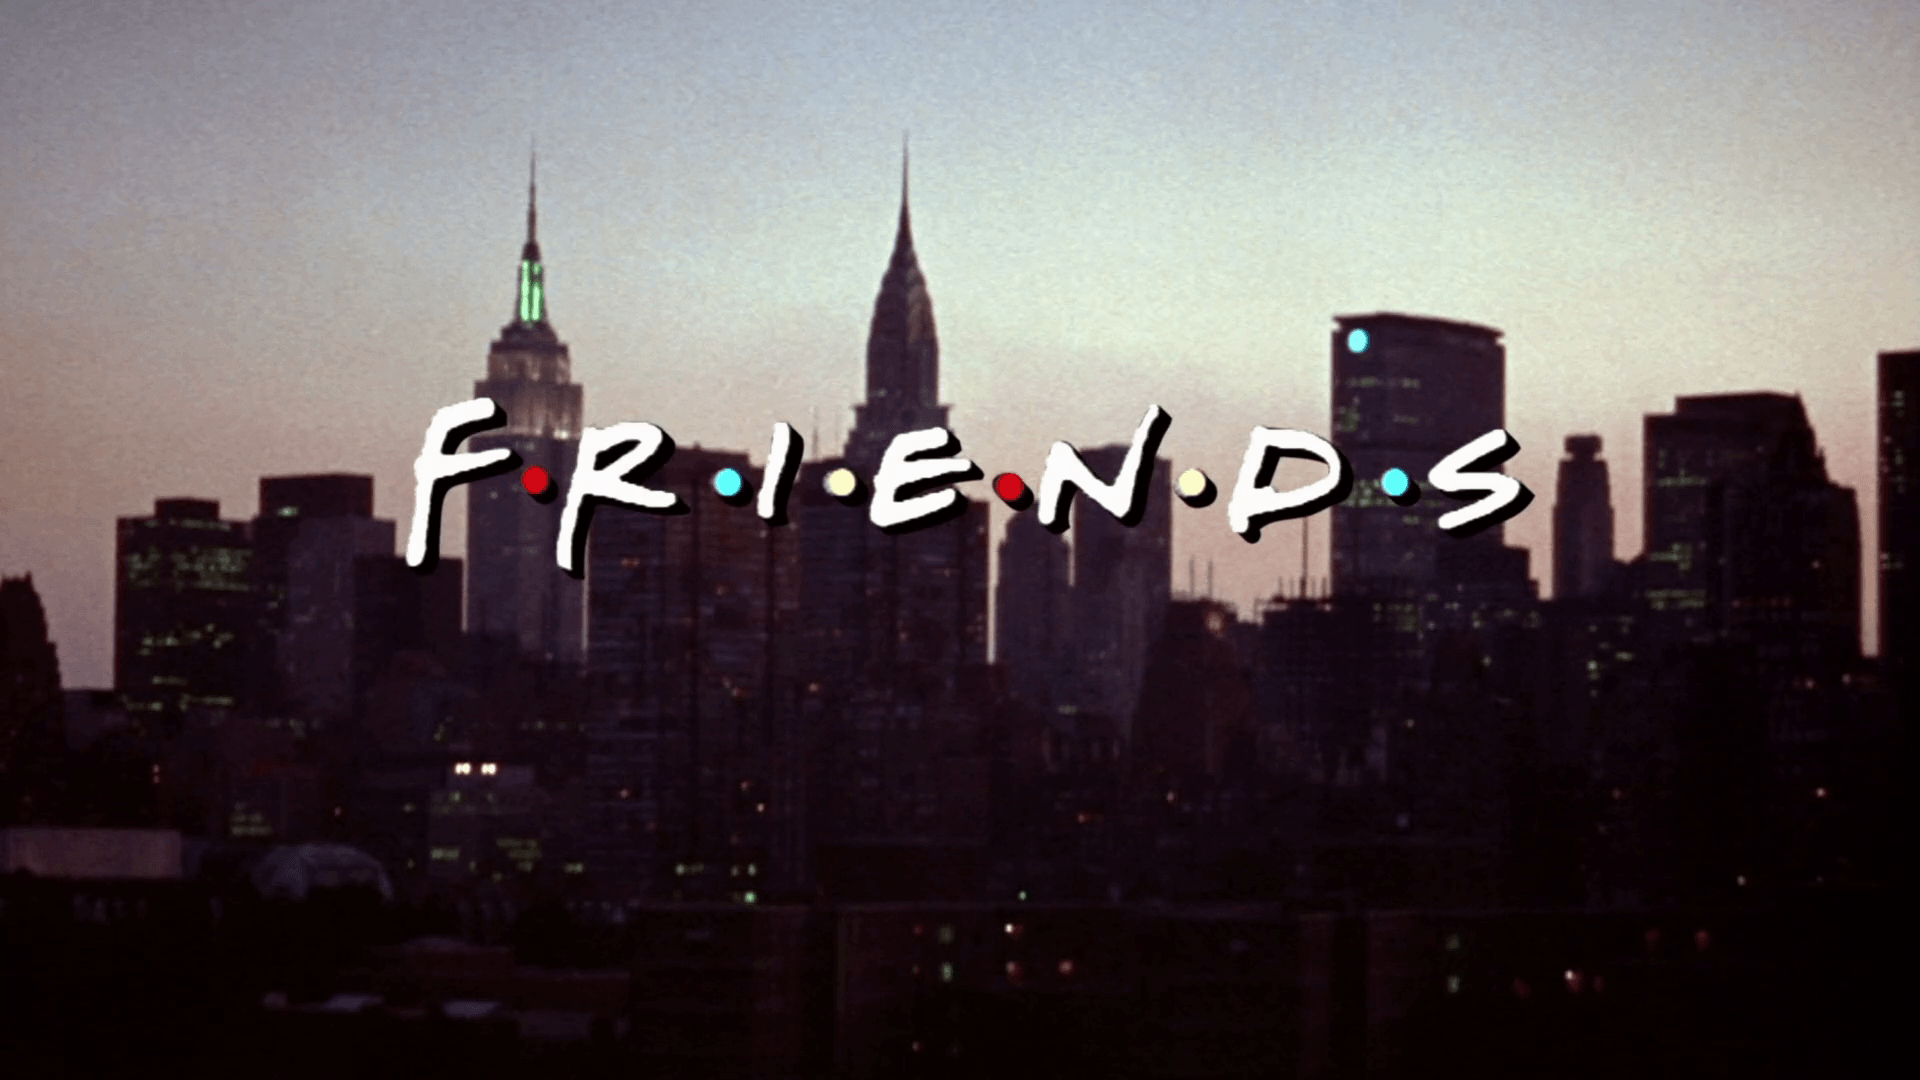 Friends TV Series Wallpapers - Wallpaper Cave